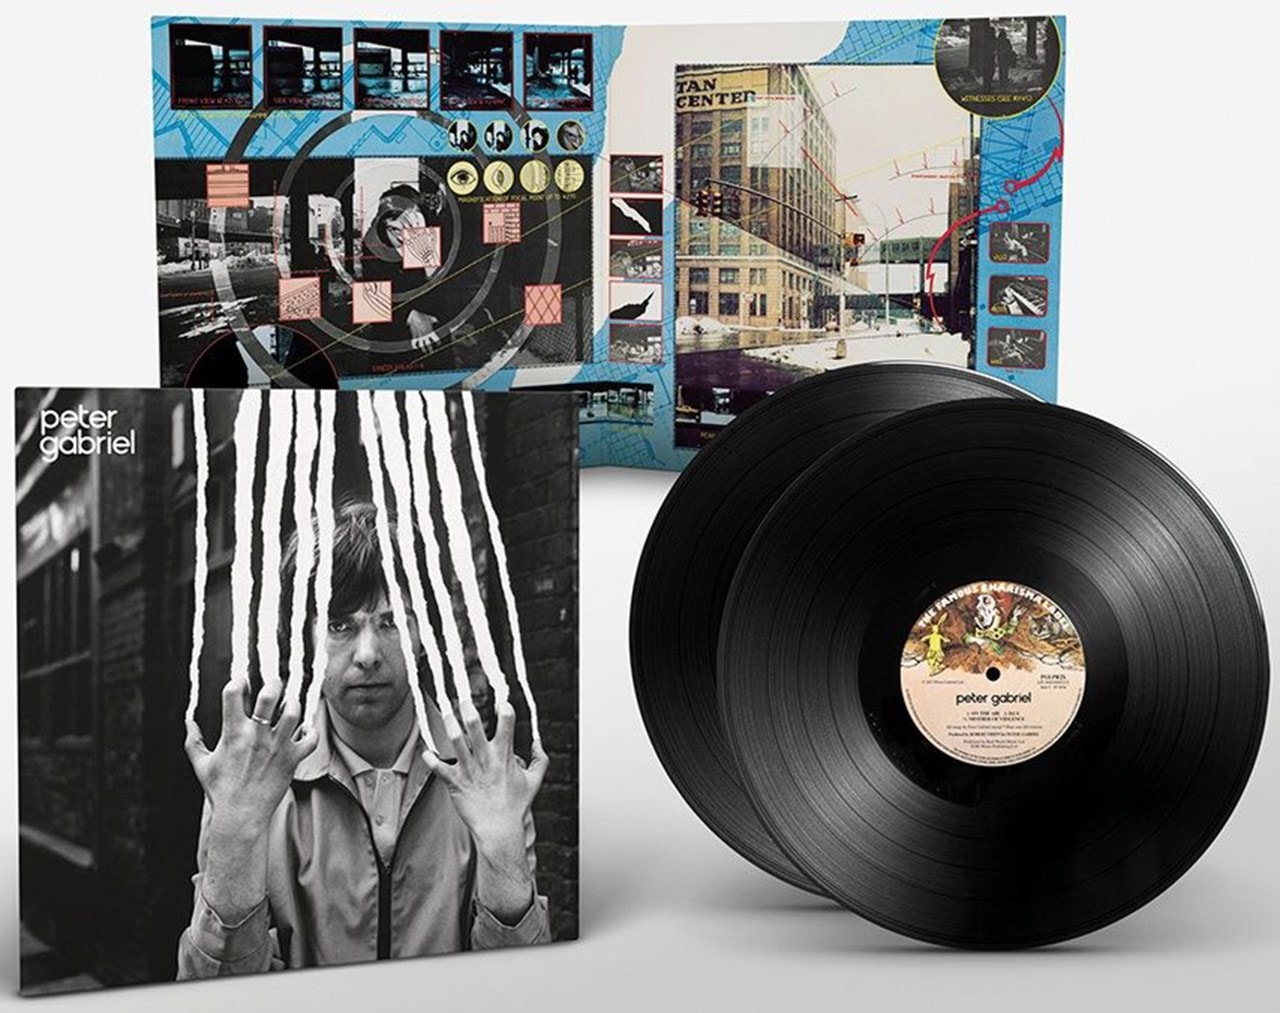 Peter Gabriel 2 Vinyl 12" Album Free shipping over £20 HMV Store